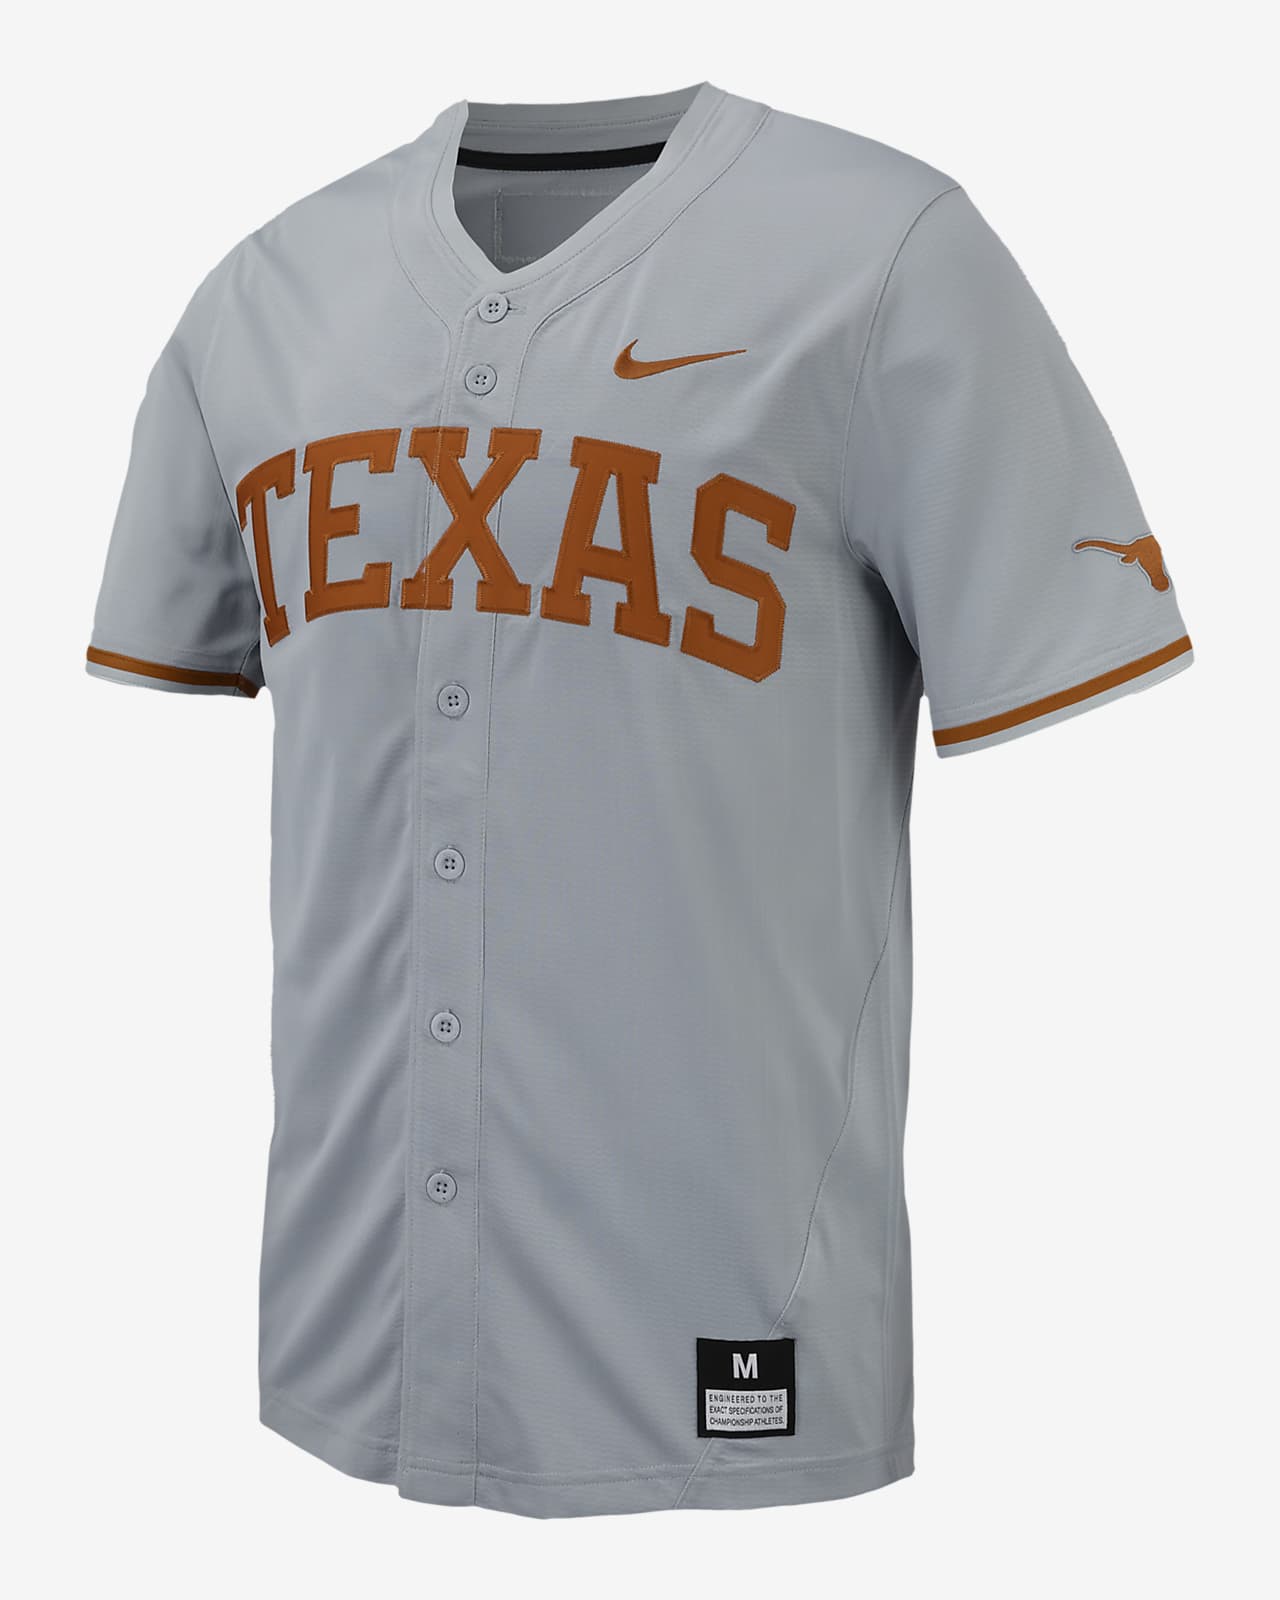 Texas Men's Nike College Replica Baseball Jersey